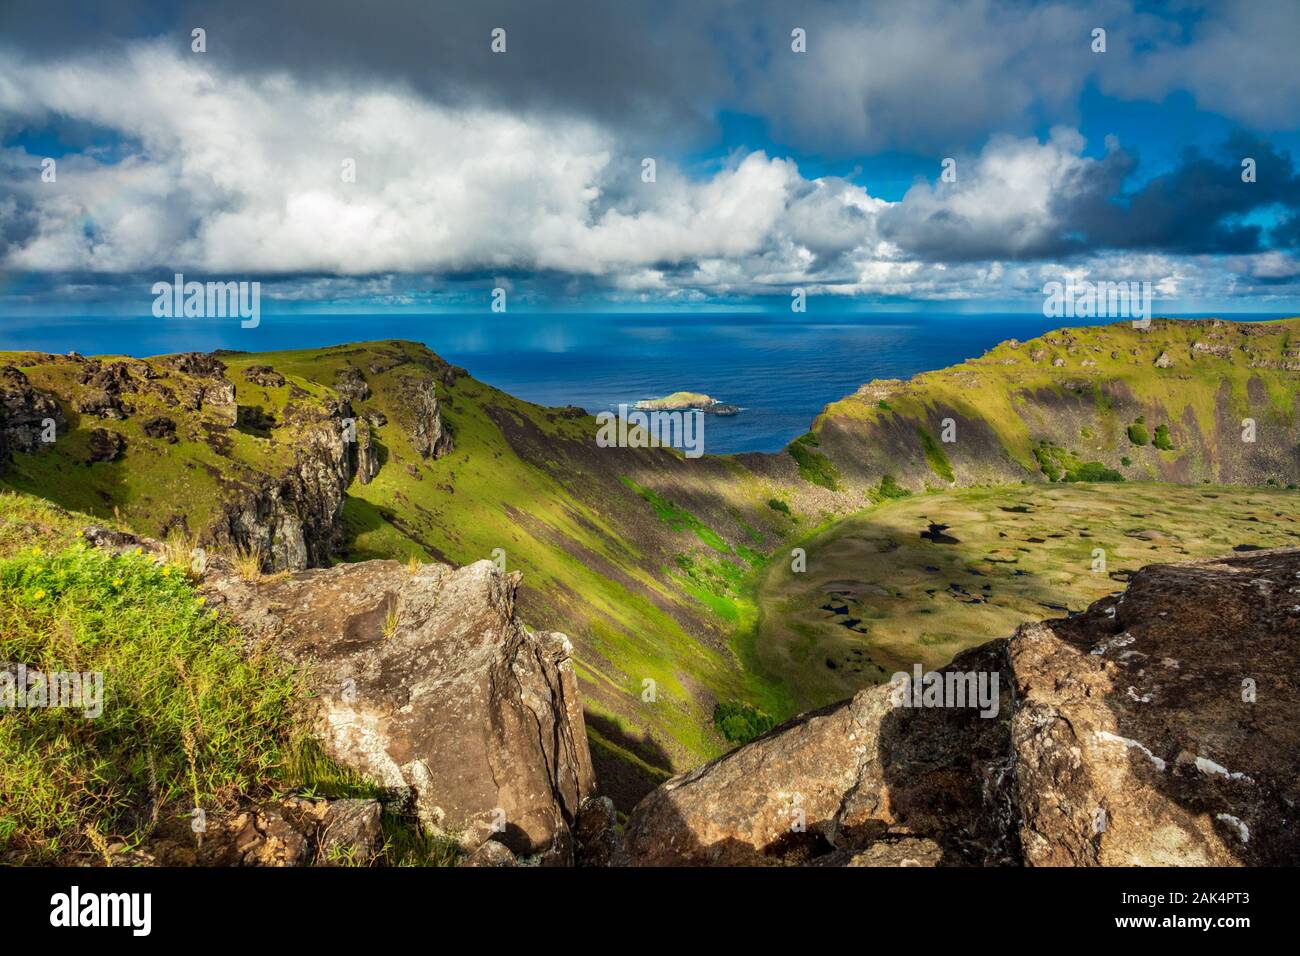 Tangata matu isolette in Rapa Nui sotto Rano Kau Foto Stock